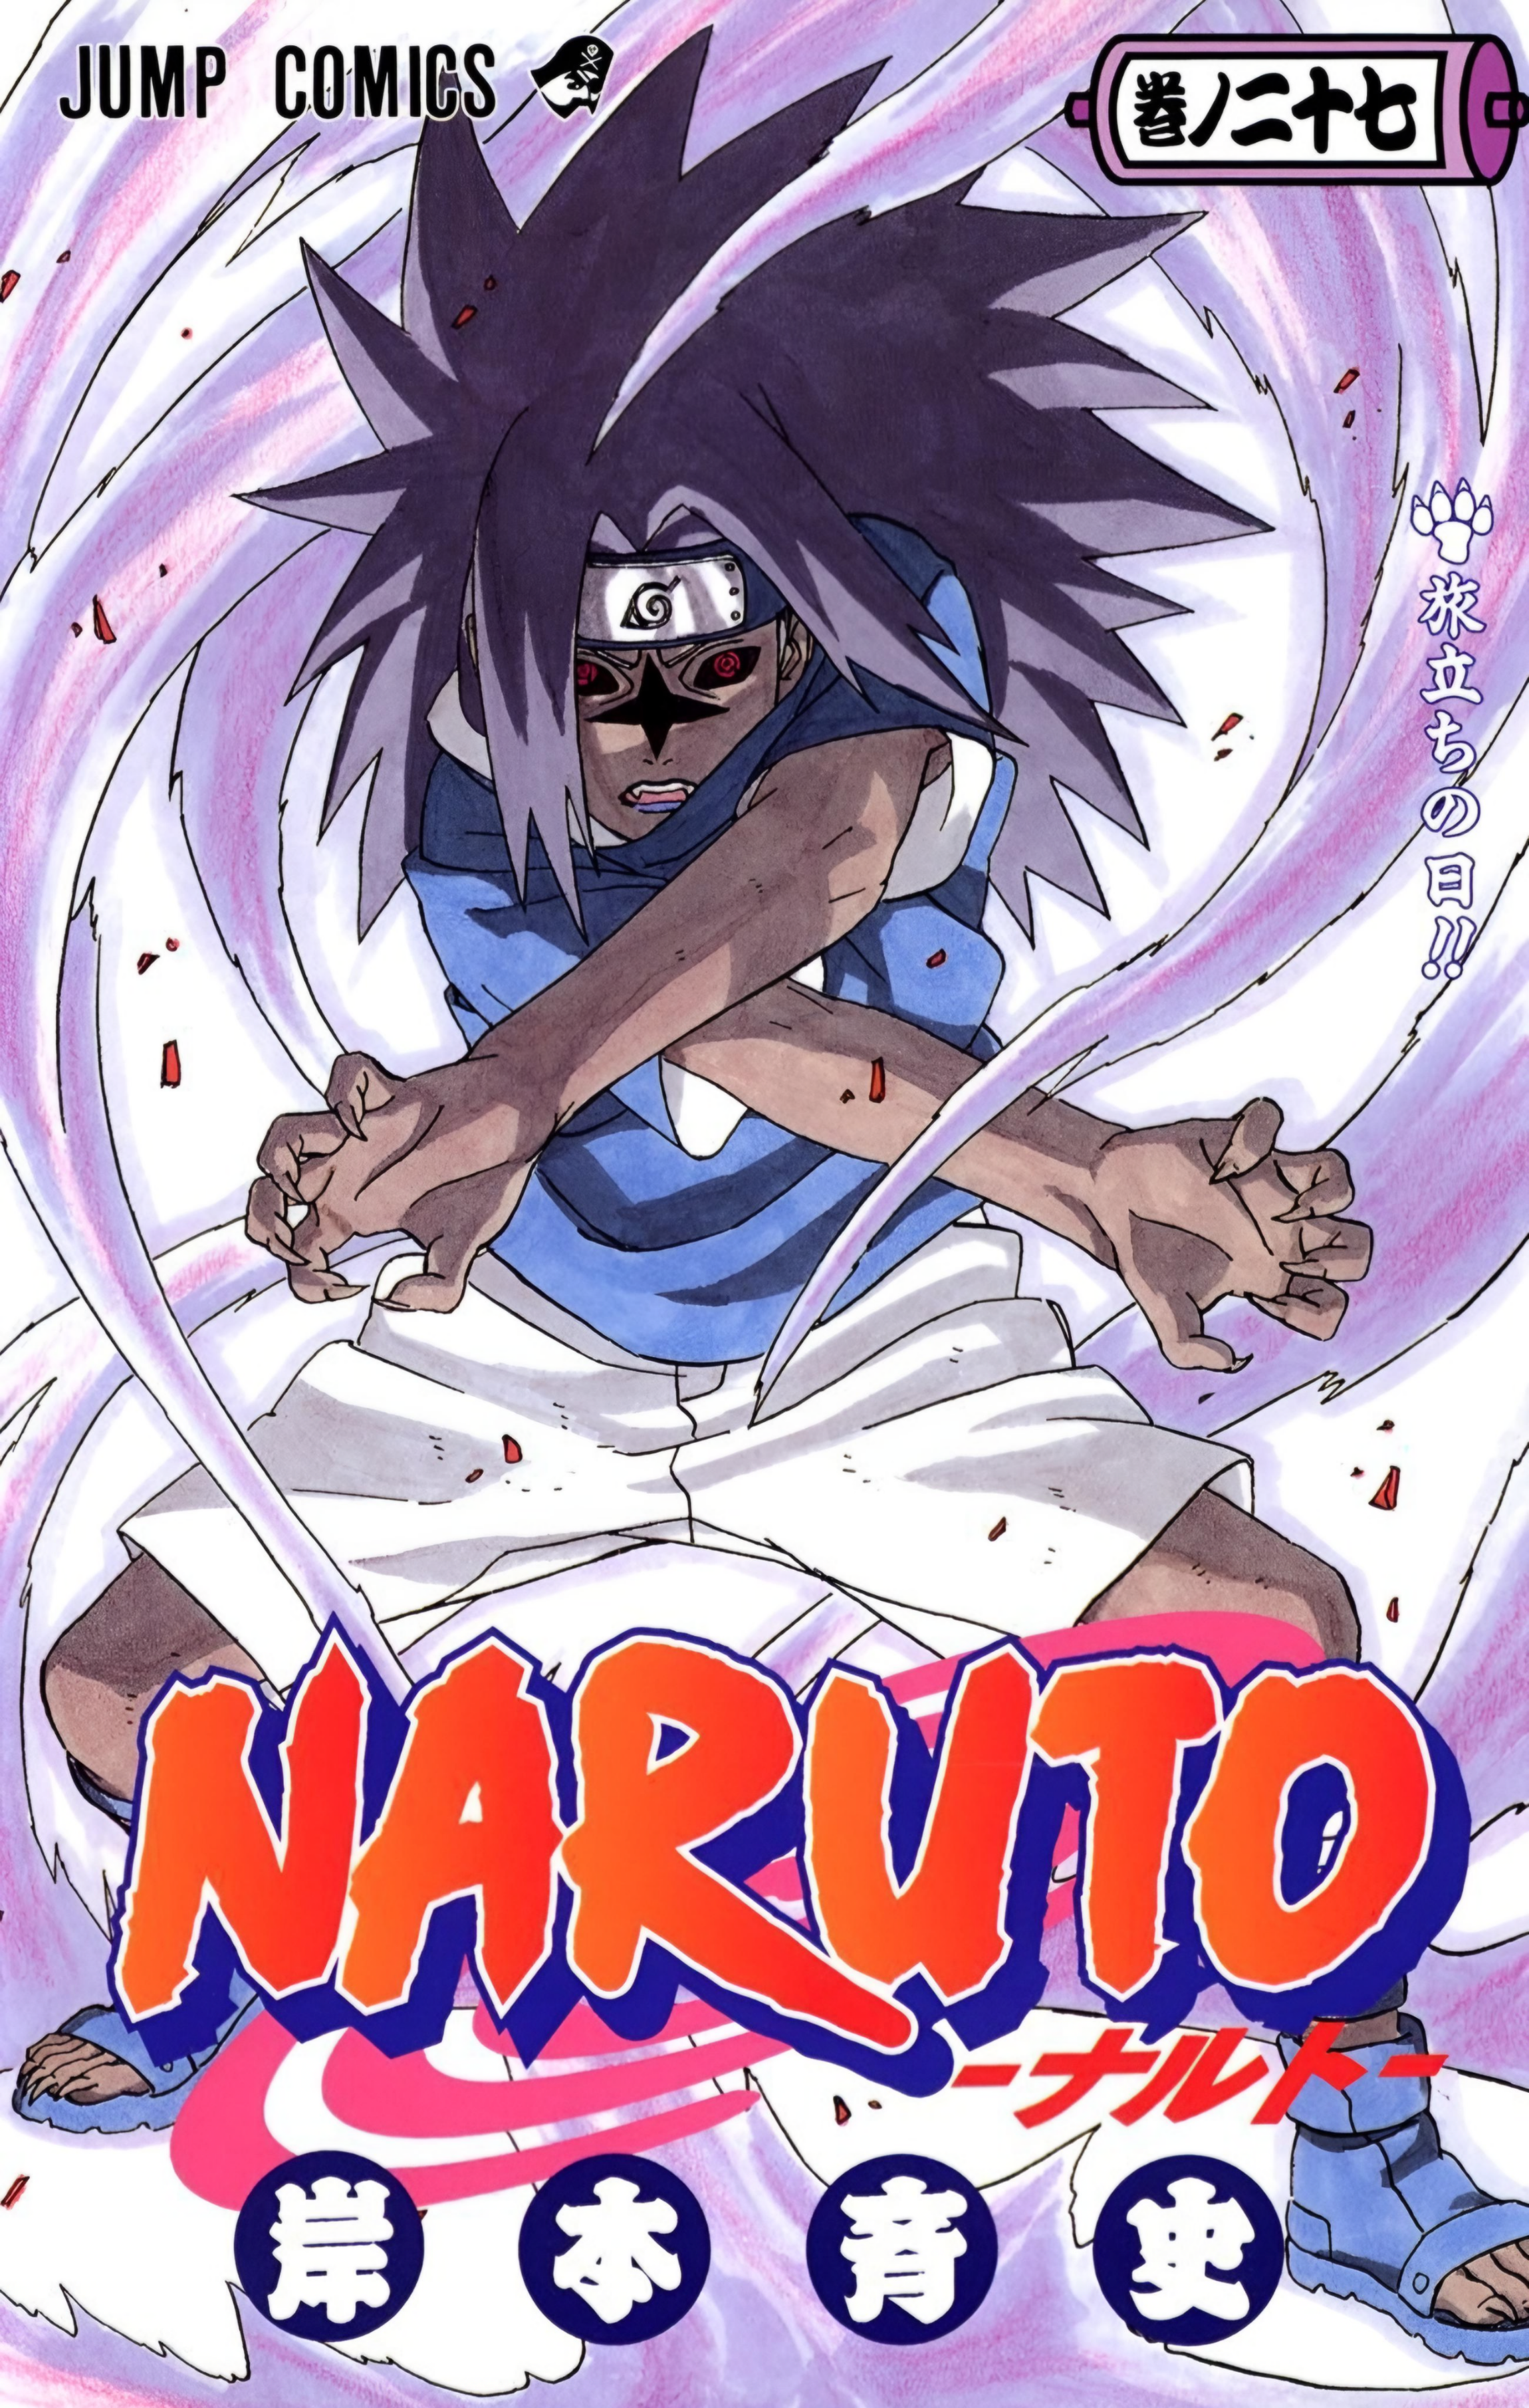 Lista de capítulos de Naruto (parte II) – Wikipédia, a enciclopédia livre